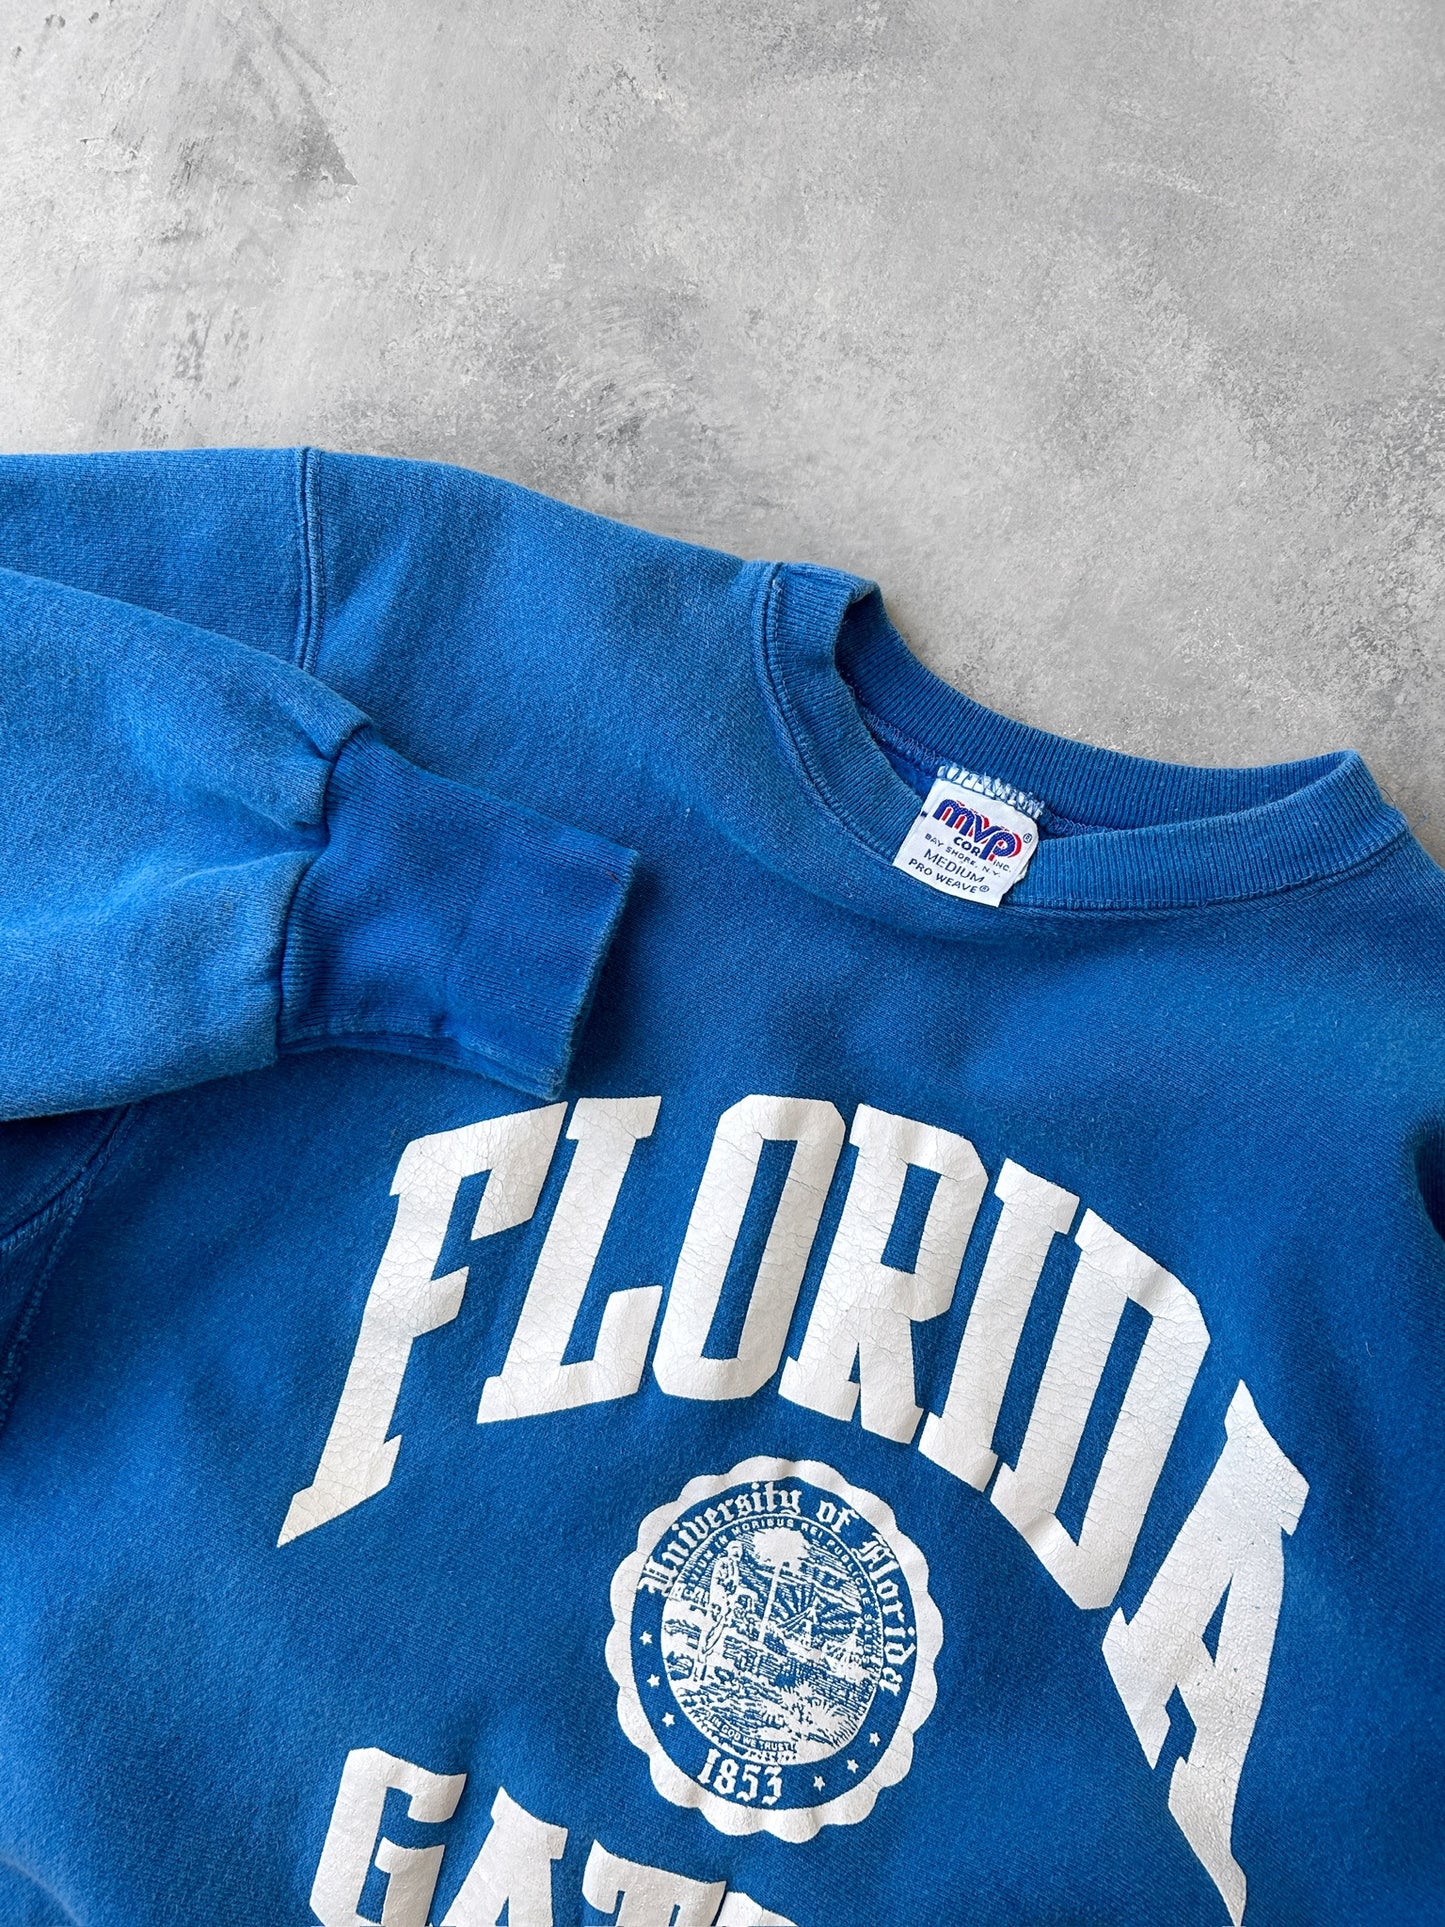 Florida Gators Sweatshirt 90's - Medium